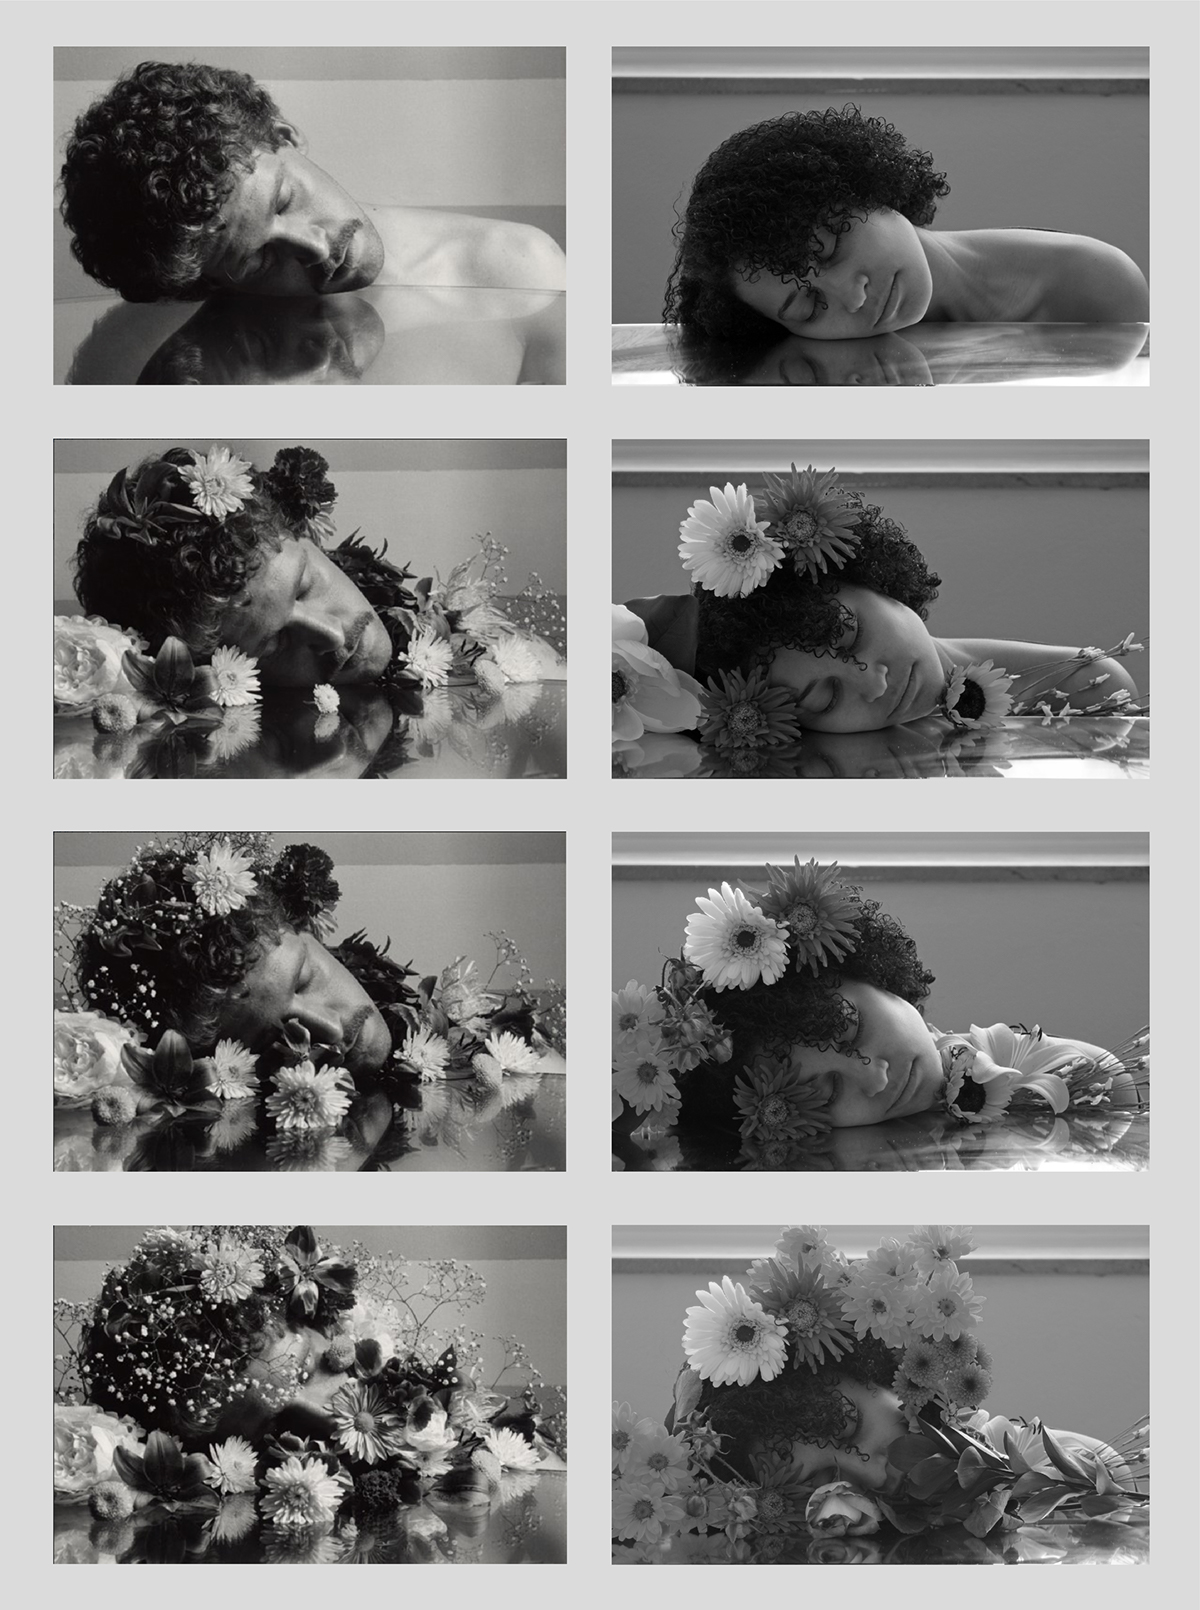 series emulation famous dream Flowers duane Michals black and white